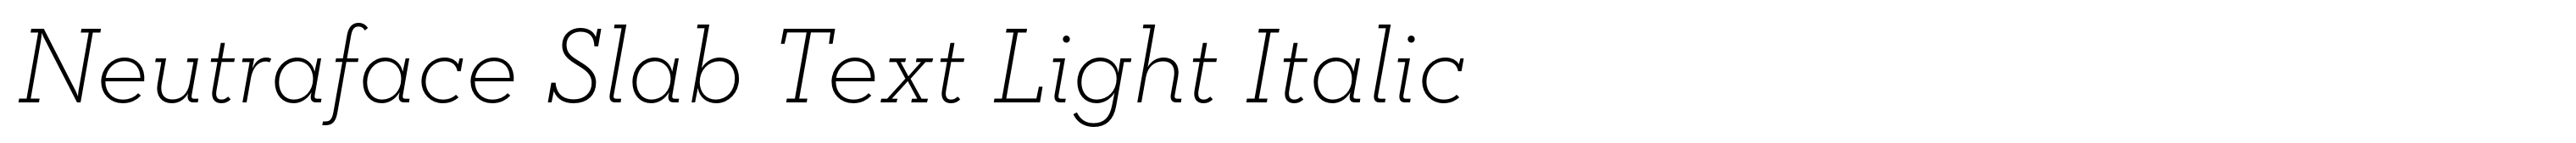 Neutraface Slab Text Light Italic